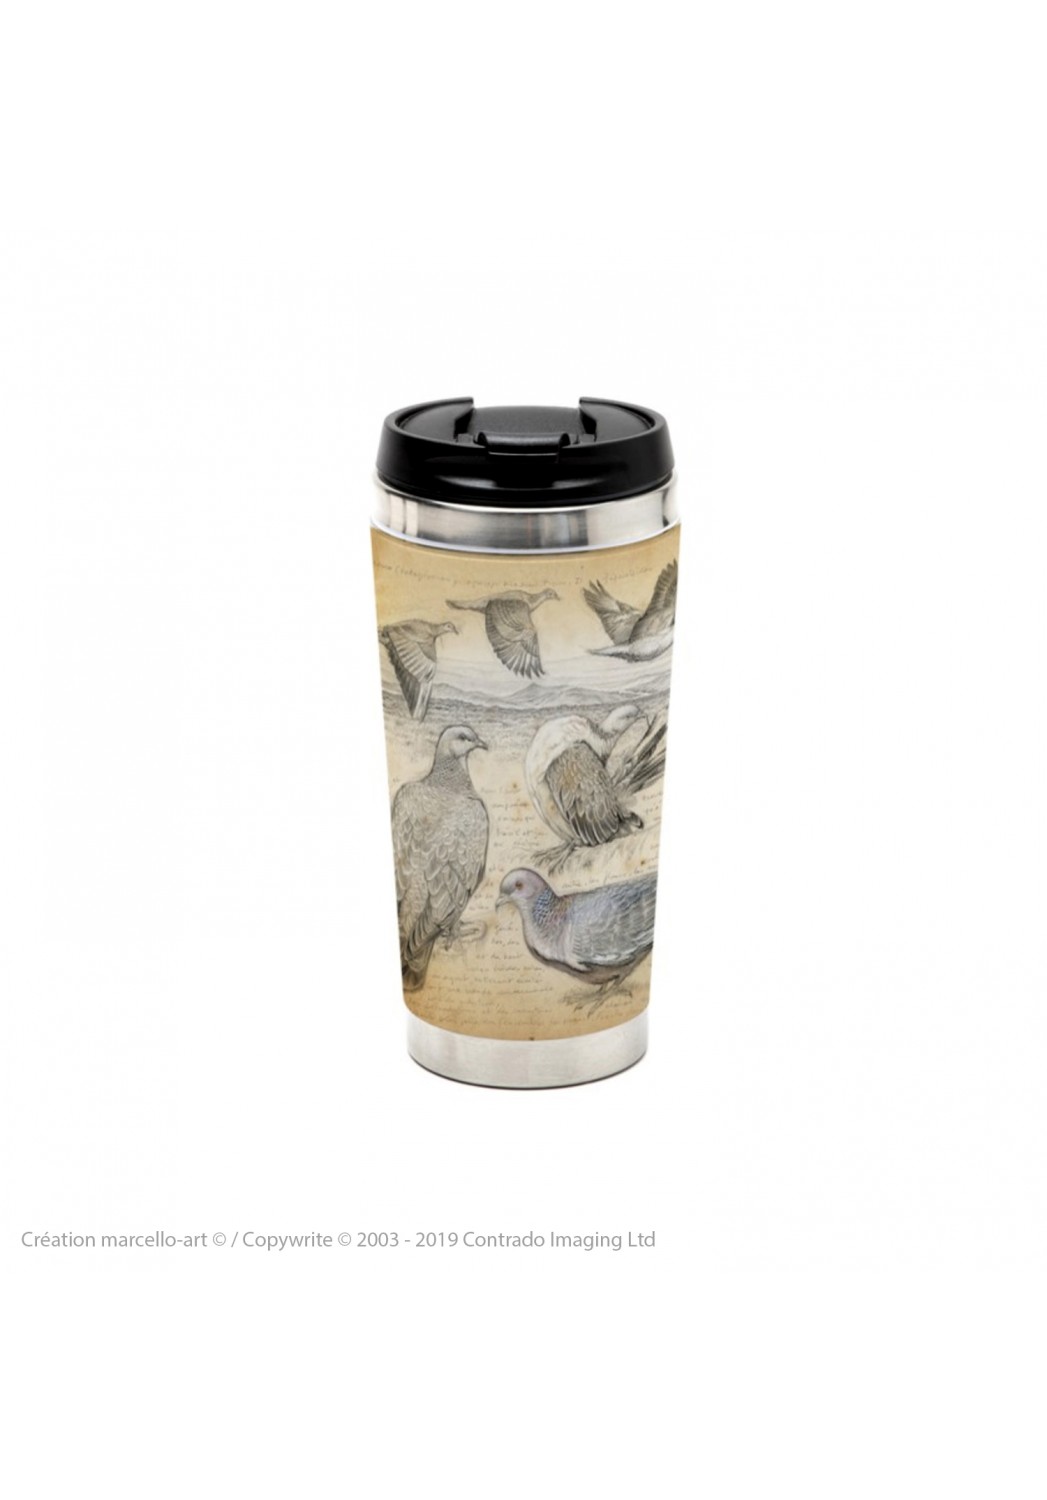 Marcello-art: Decoration accessoiries Thermos mug 233 Picazuro Pigeon